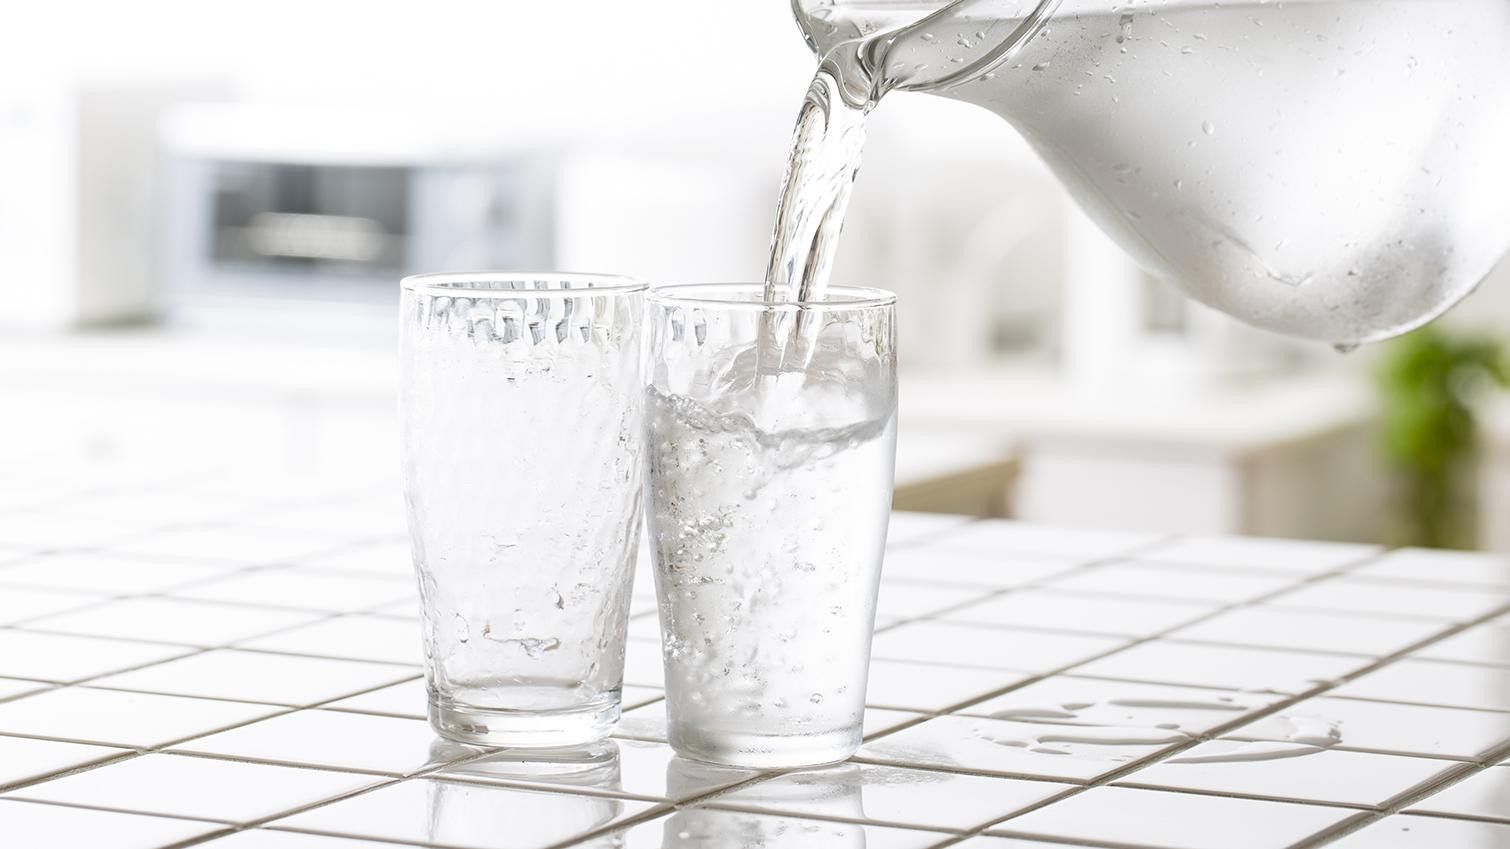 Benarkah Minum Air Hangat Lebih Baik untuk Kesehatan daripada Air Dingin?